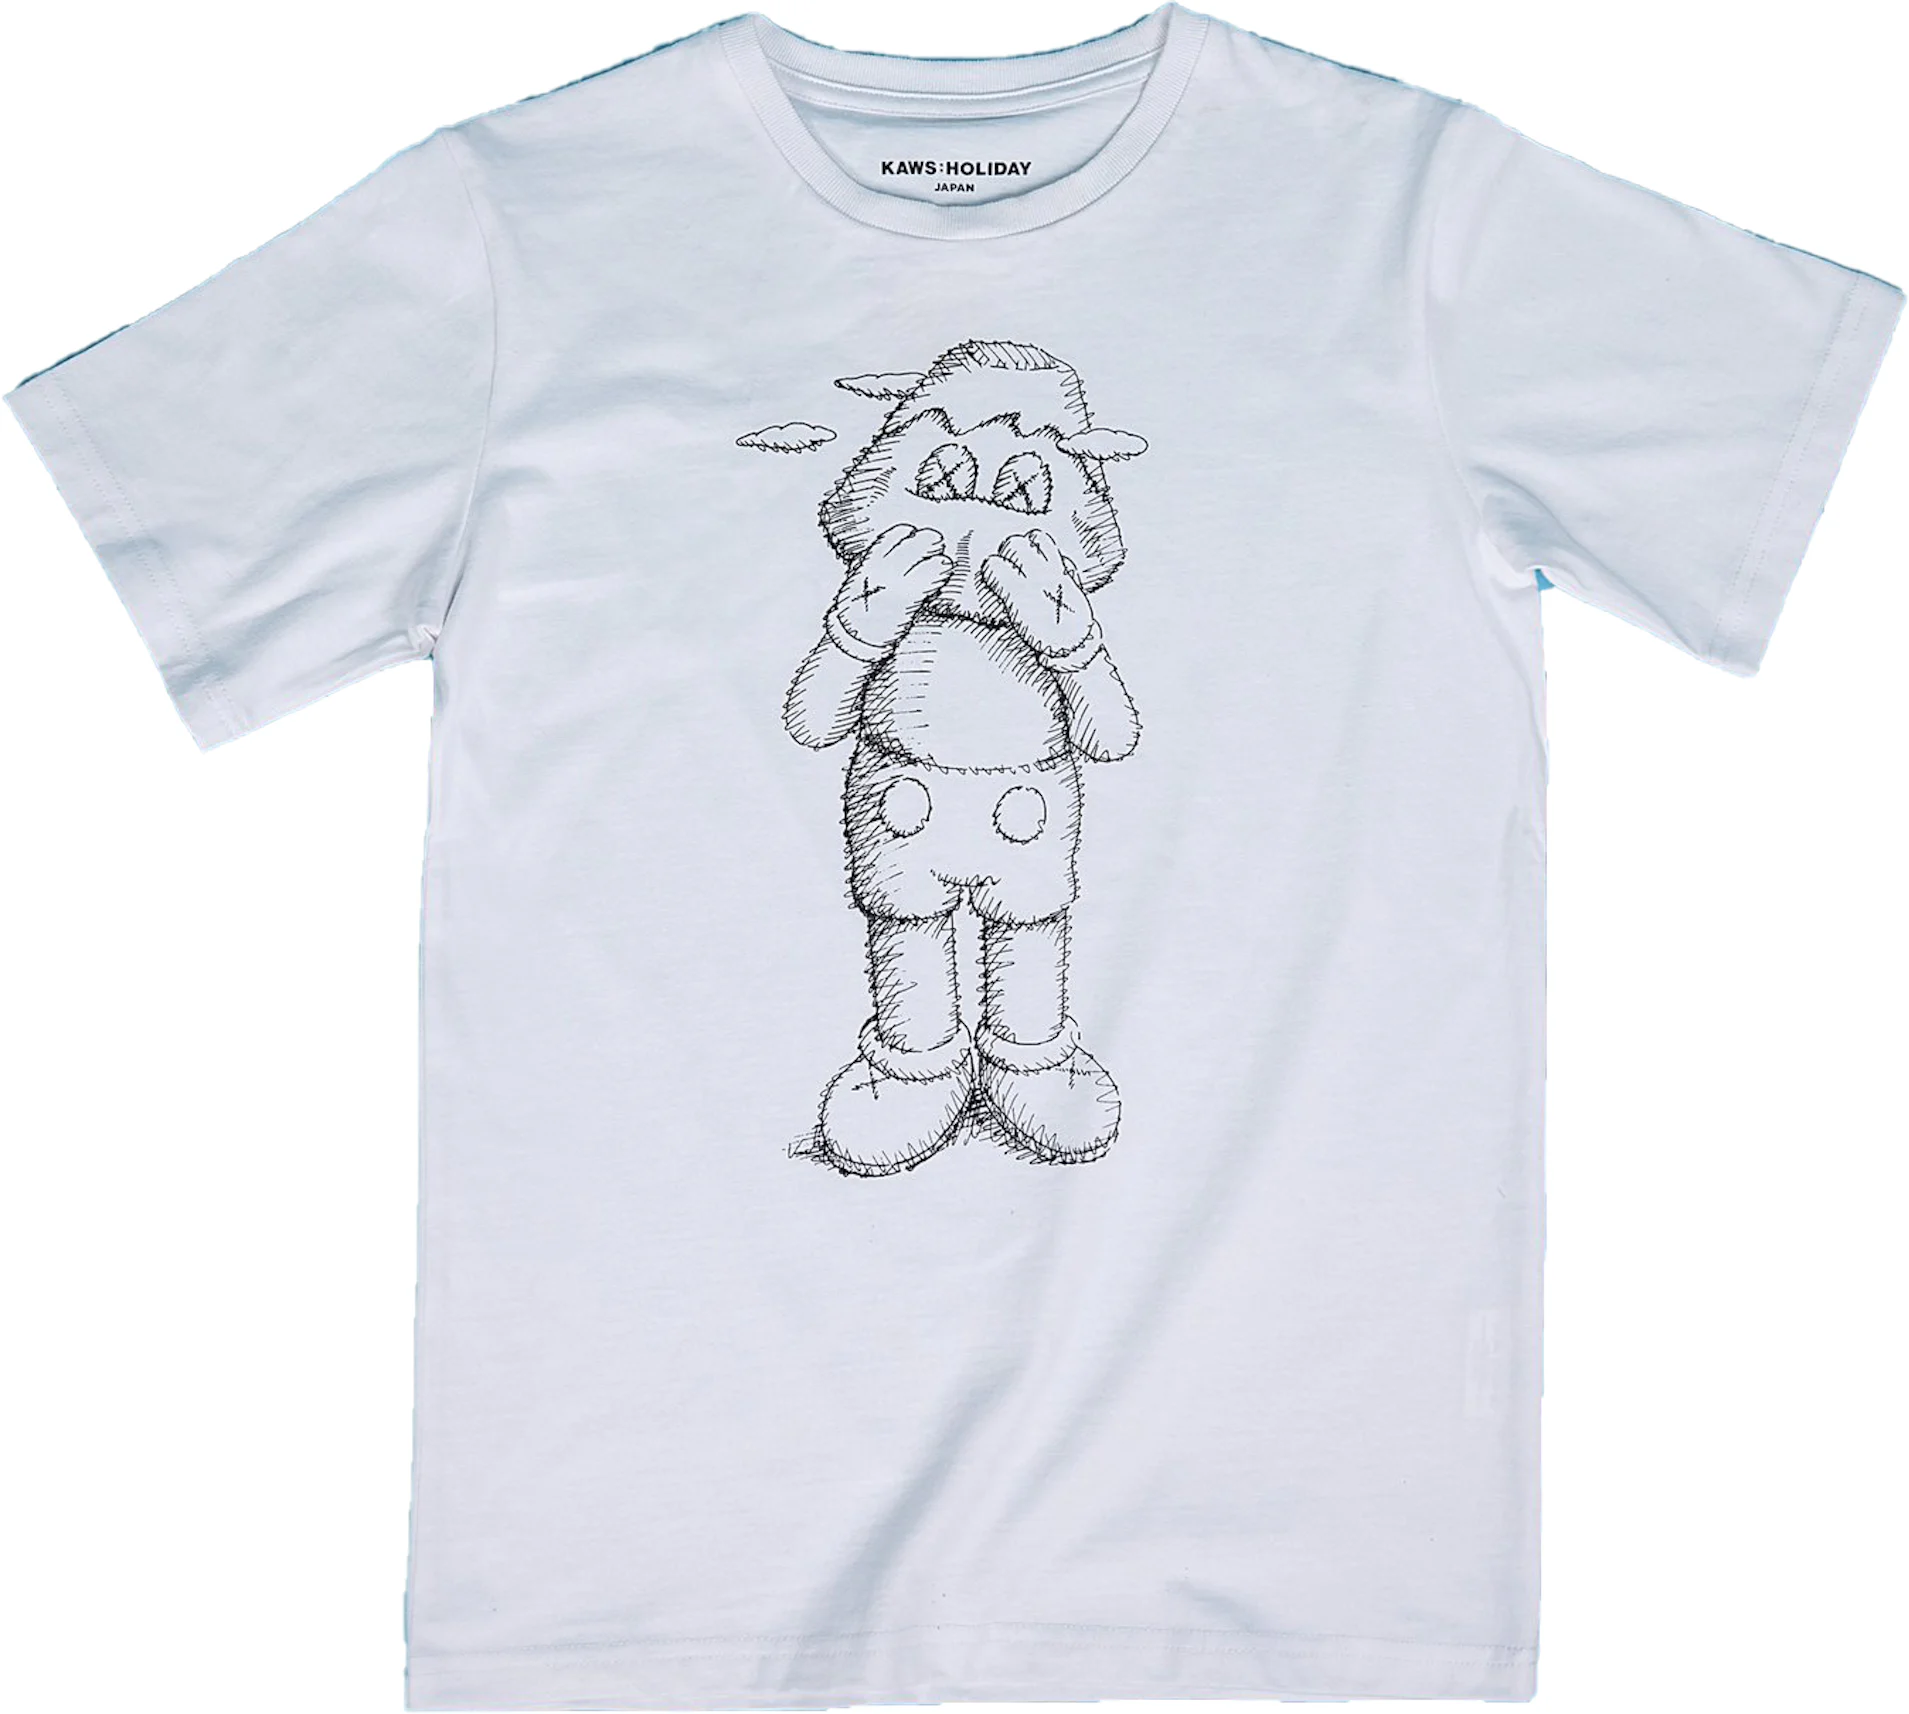 KAWS HOLIDAY JAPAN Sketch T-Shirt White